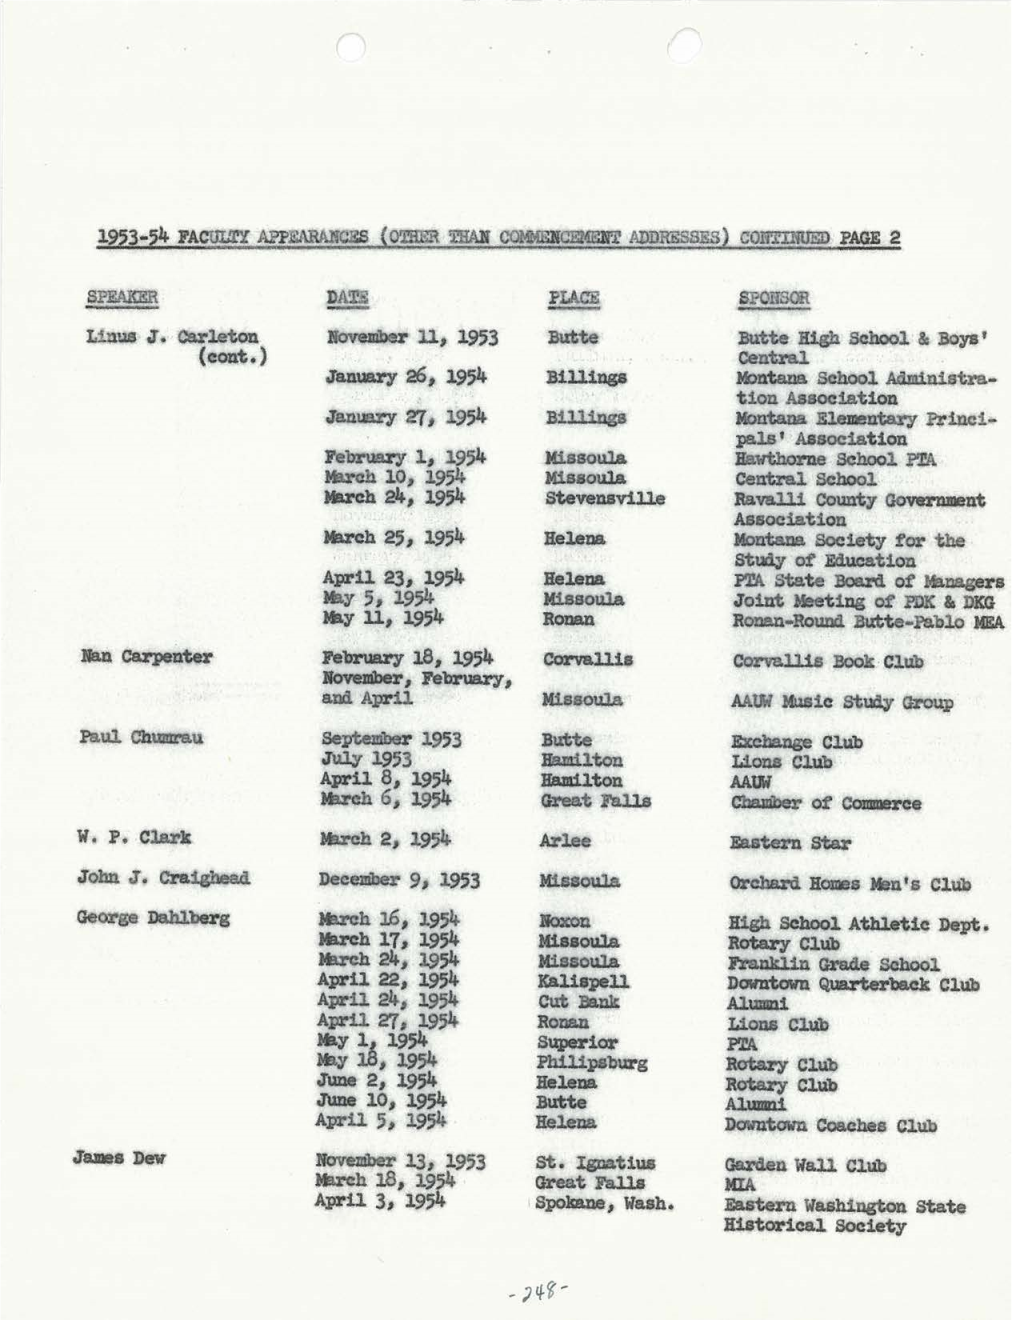 University of Montana President's Annual Report, 1953-1954